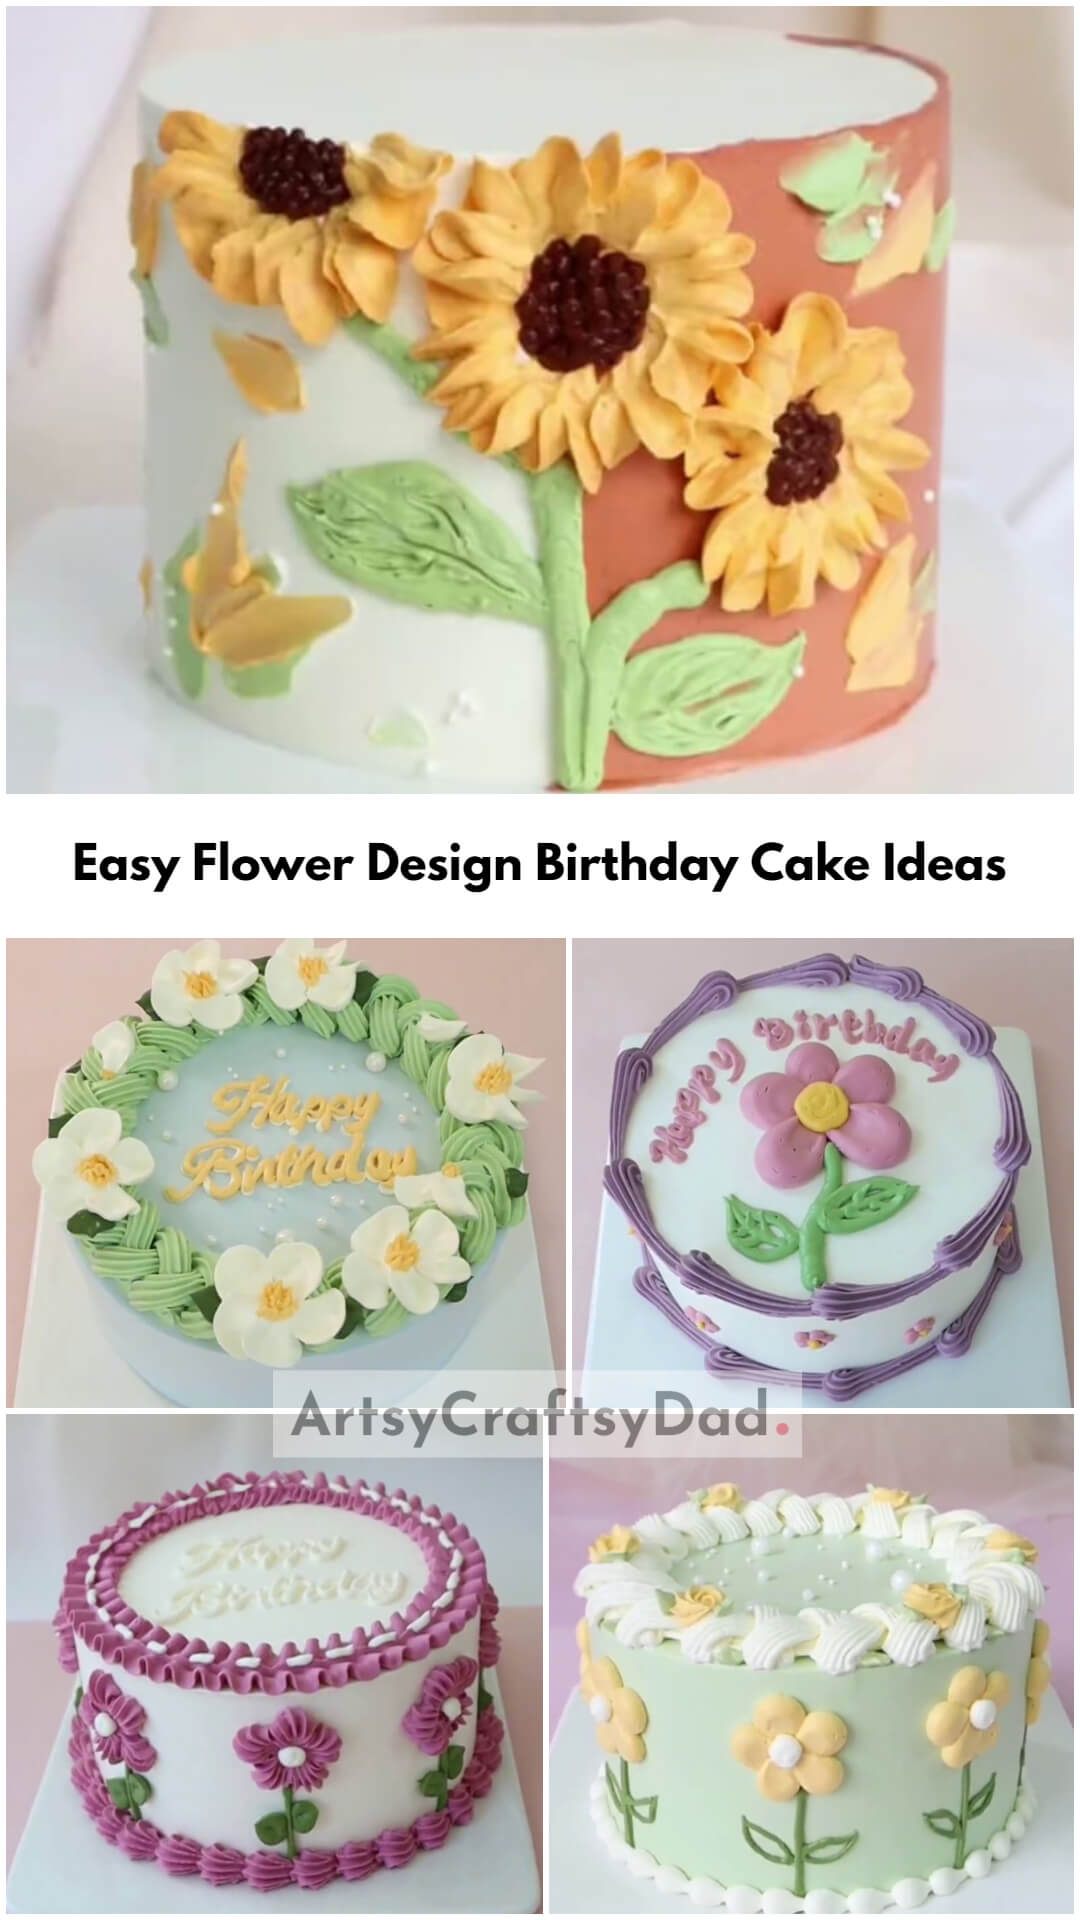 Easy Flower Design Birthday Cake Ideas For Everyone